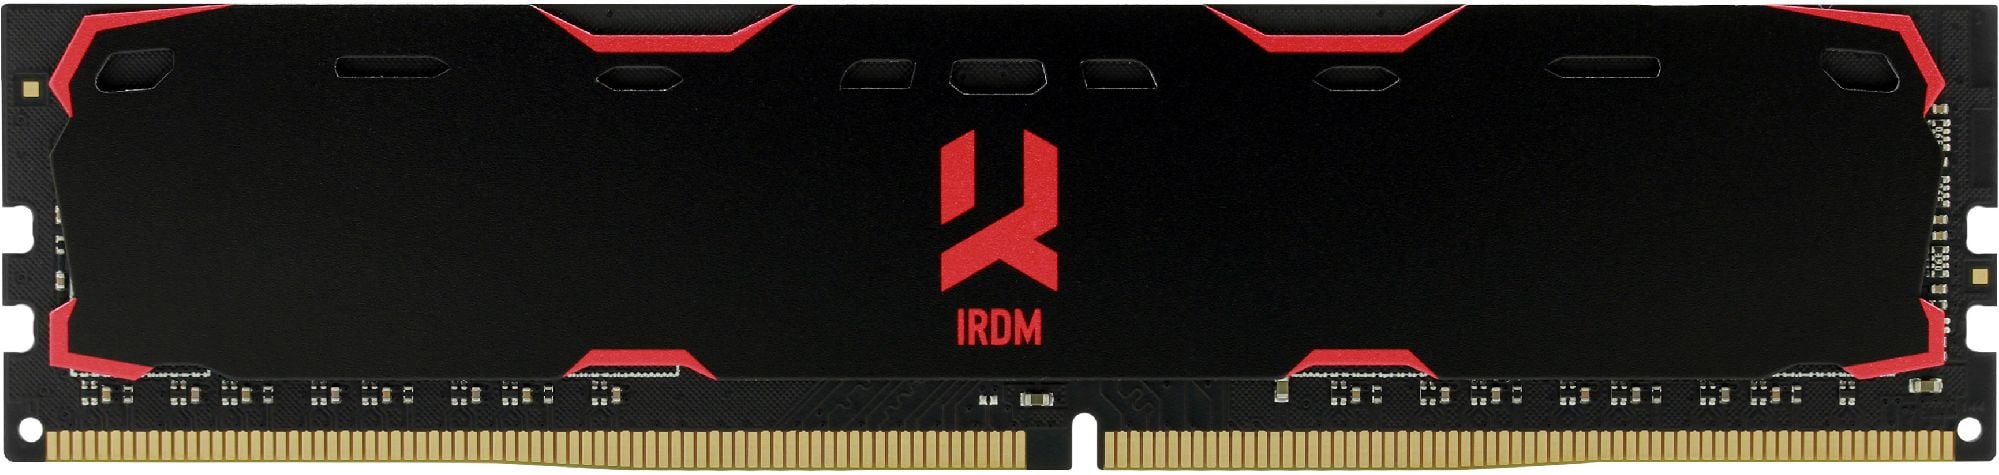 Memorie RAM Goodram IRDM Black, IR-2400D464L15S/8G, 8GB, DDR4, 2400MHz, CL15